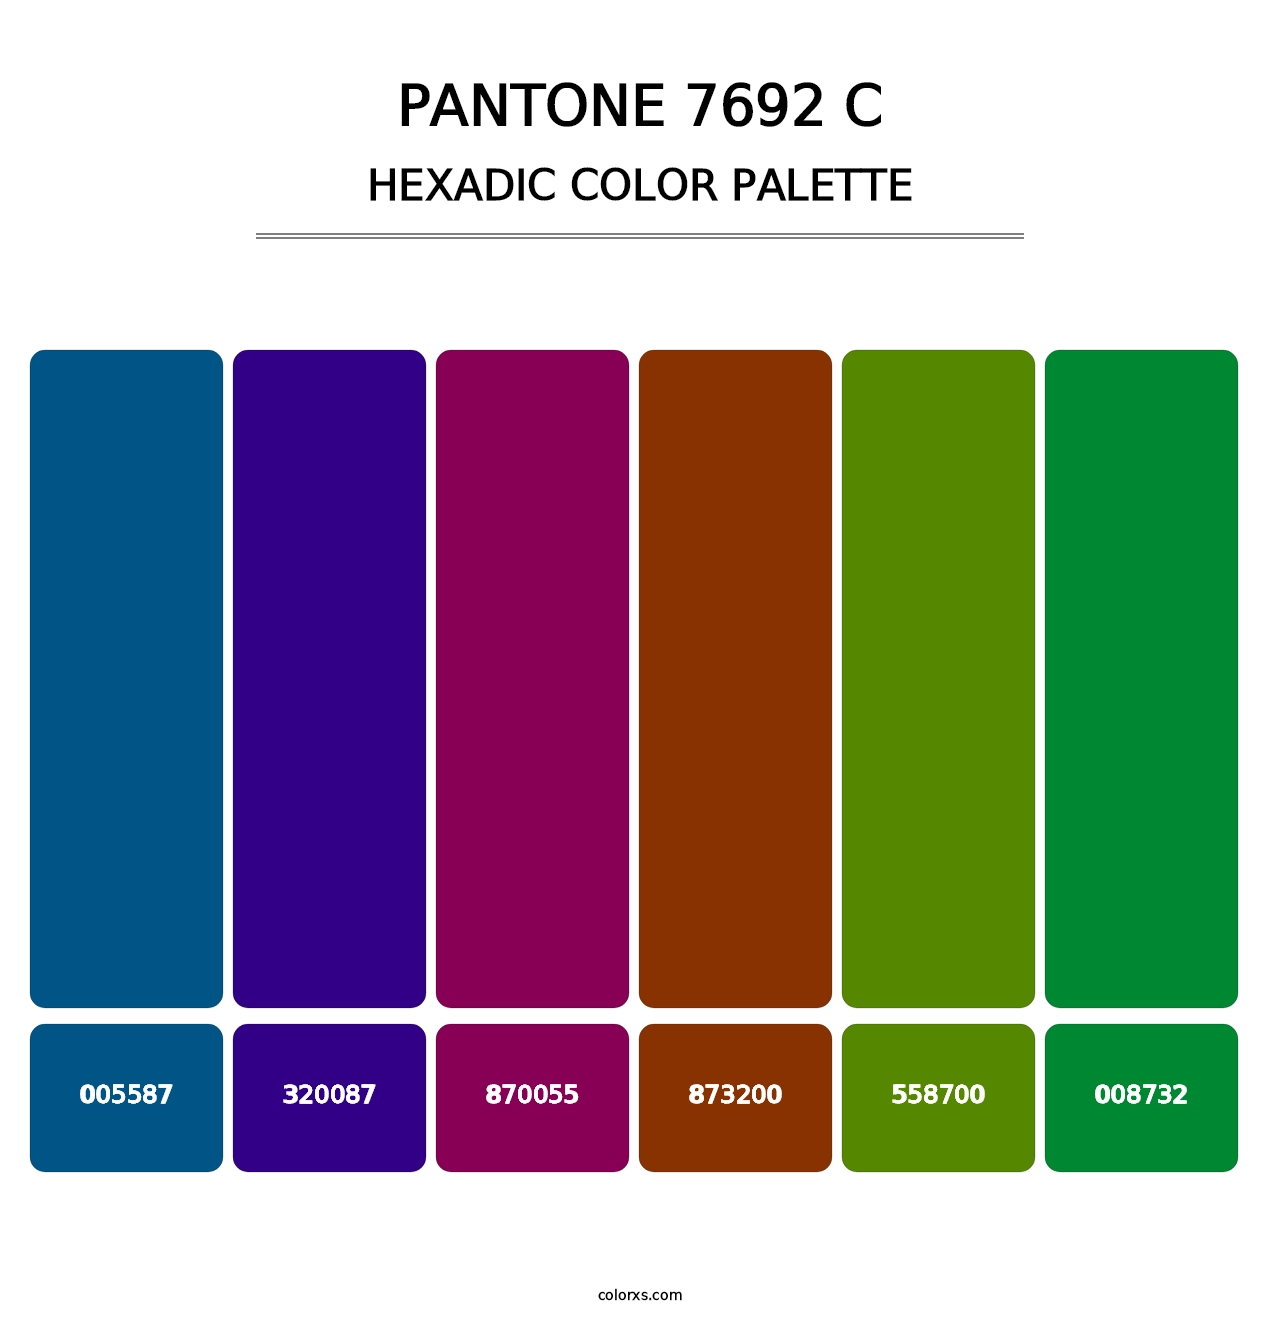 PANTONE 7692 C - Hexadic Color Palette